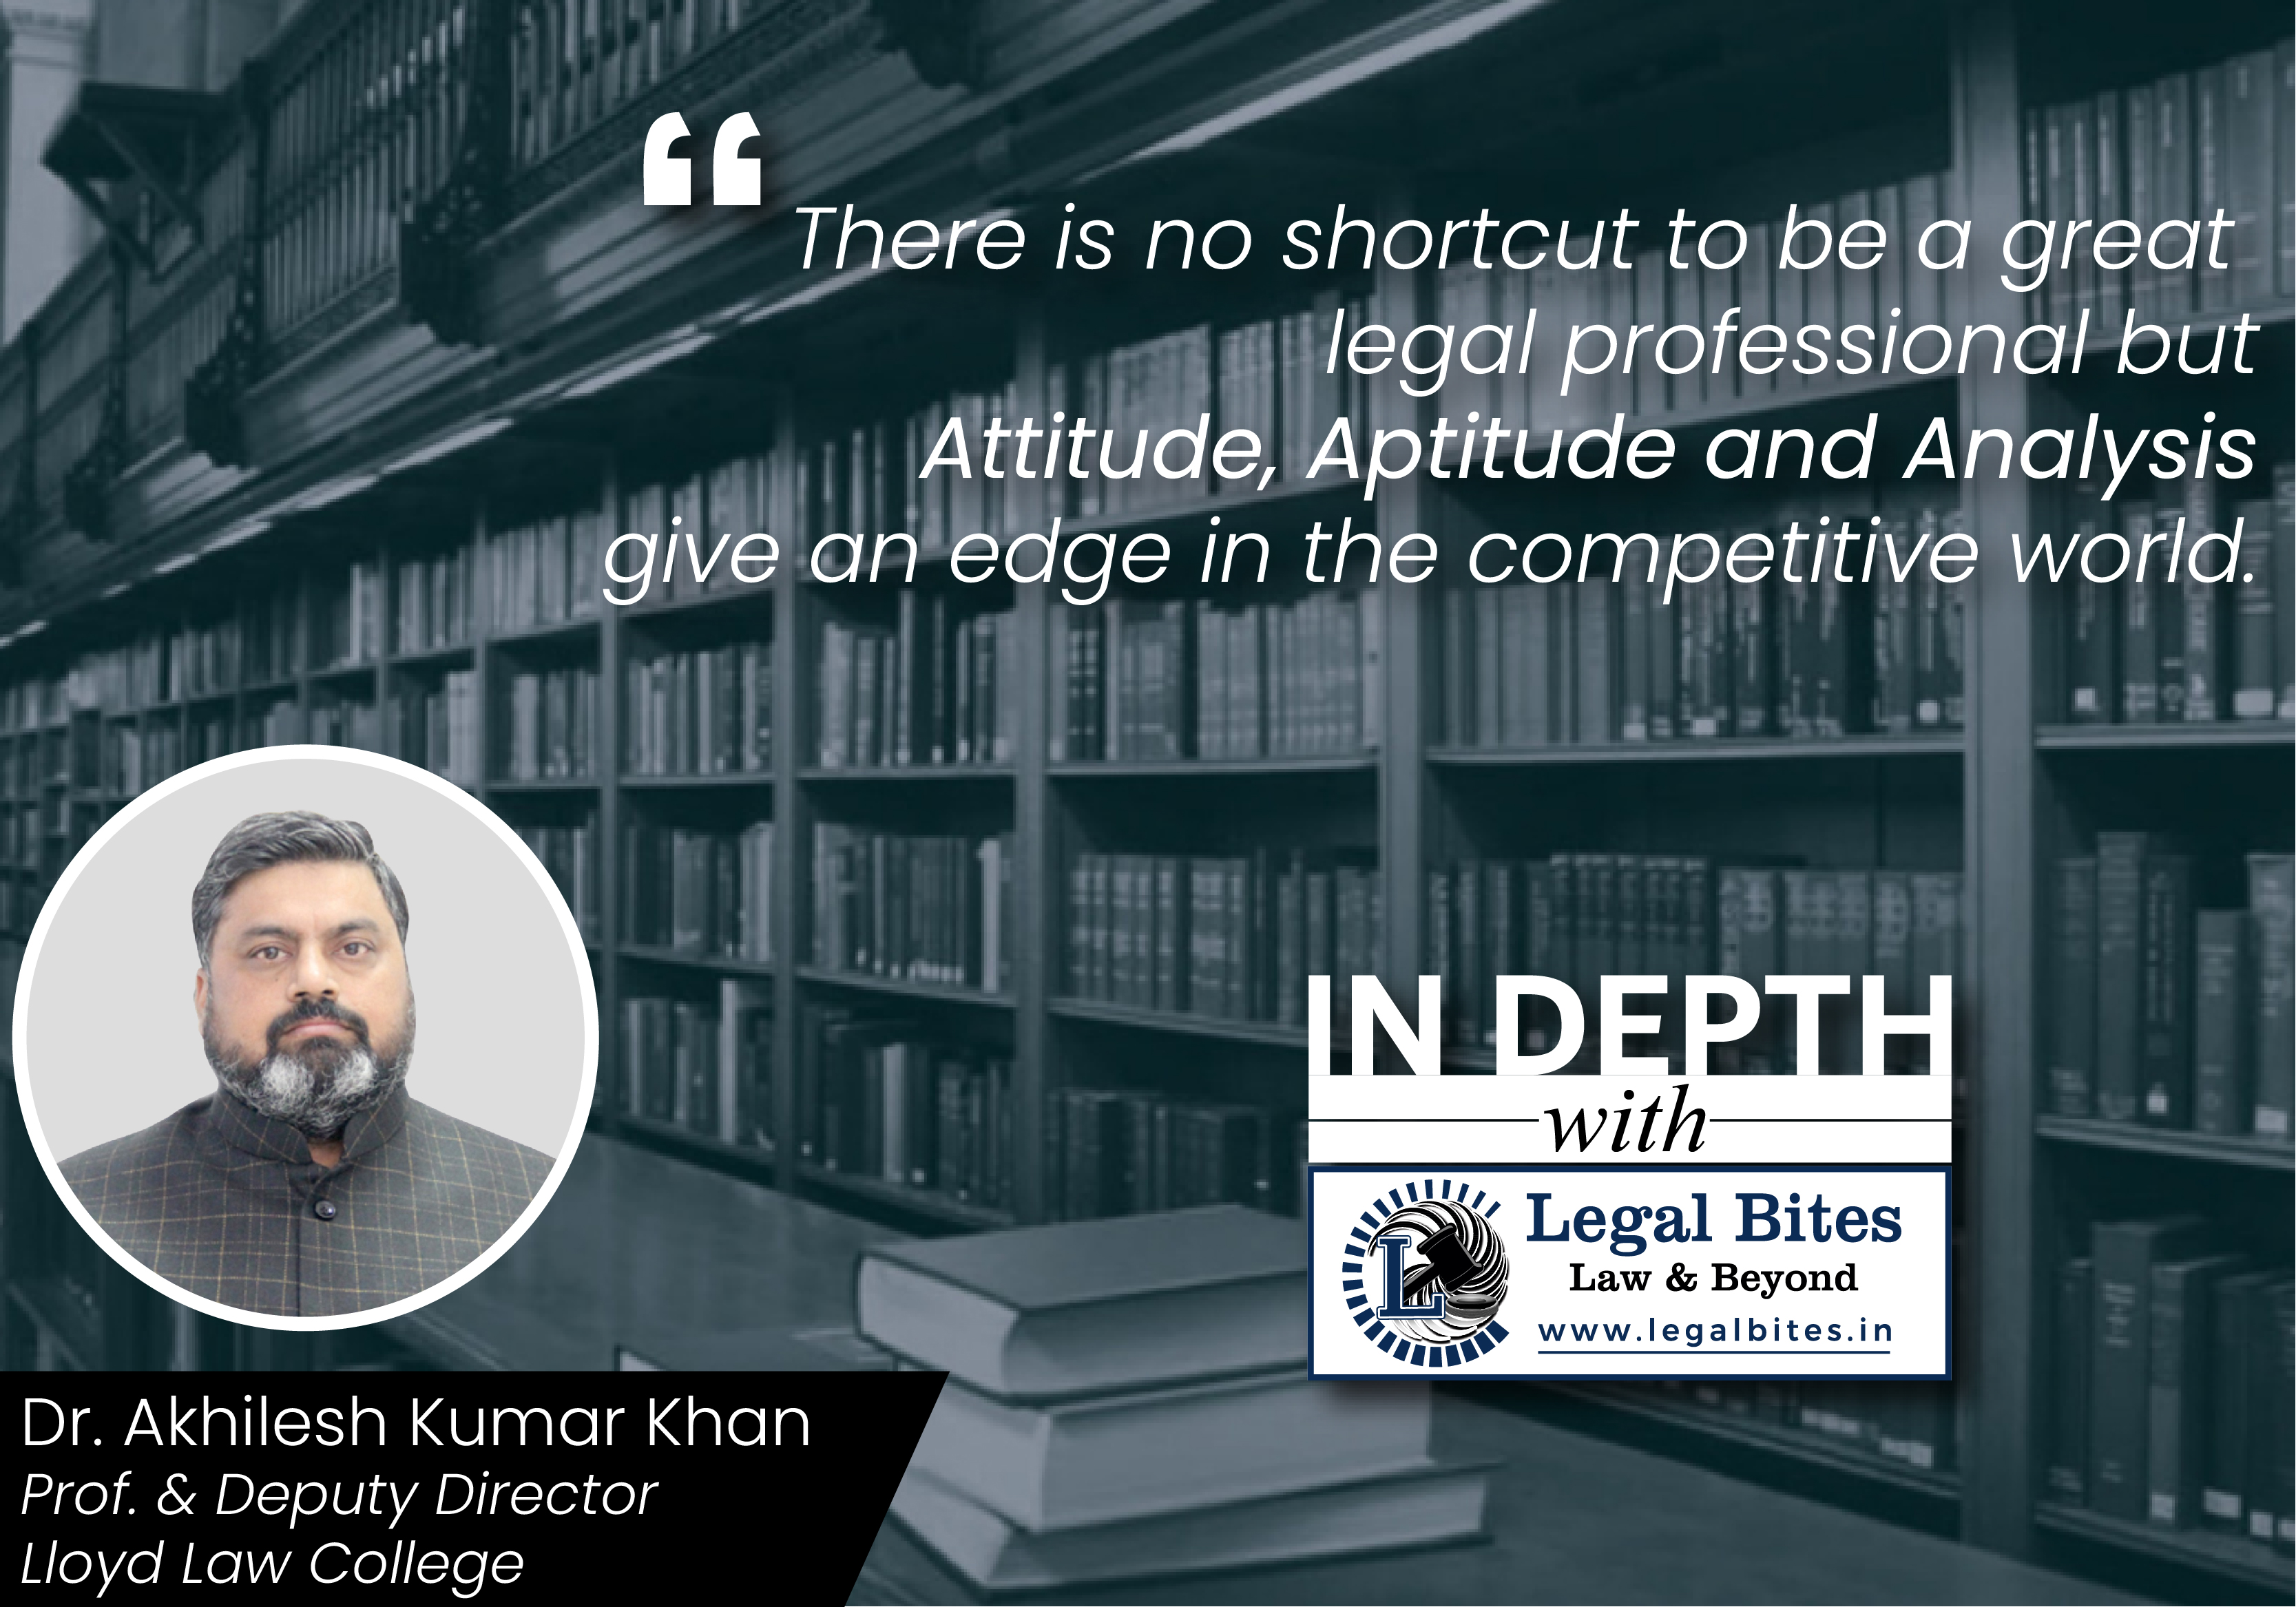 Interview: Dr Akhilesh Kumar Khan, Prof. & Deputy Director at Lloyd Law College